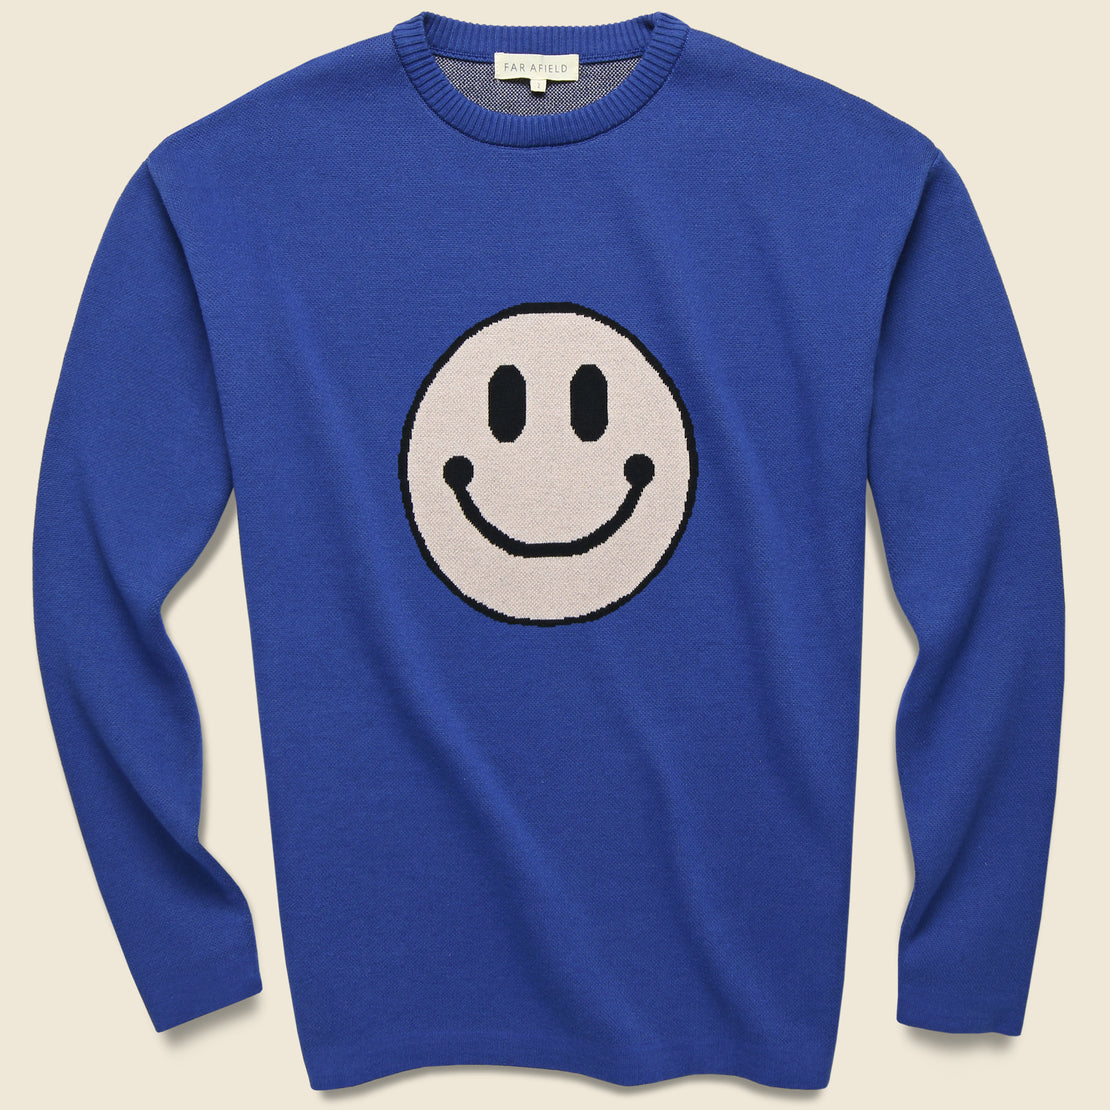 Far Afield Acid Smile Knit Sweater - Blue